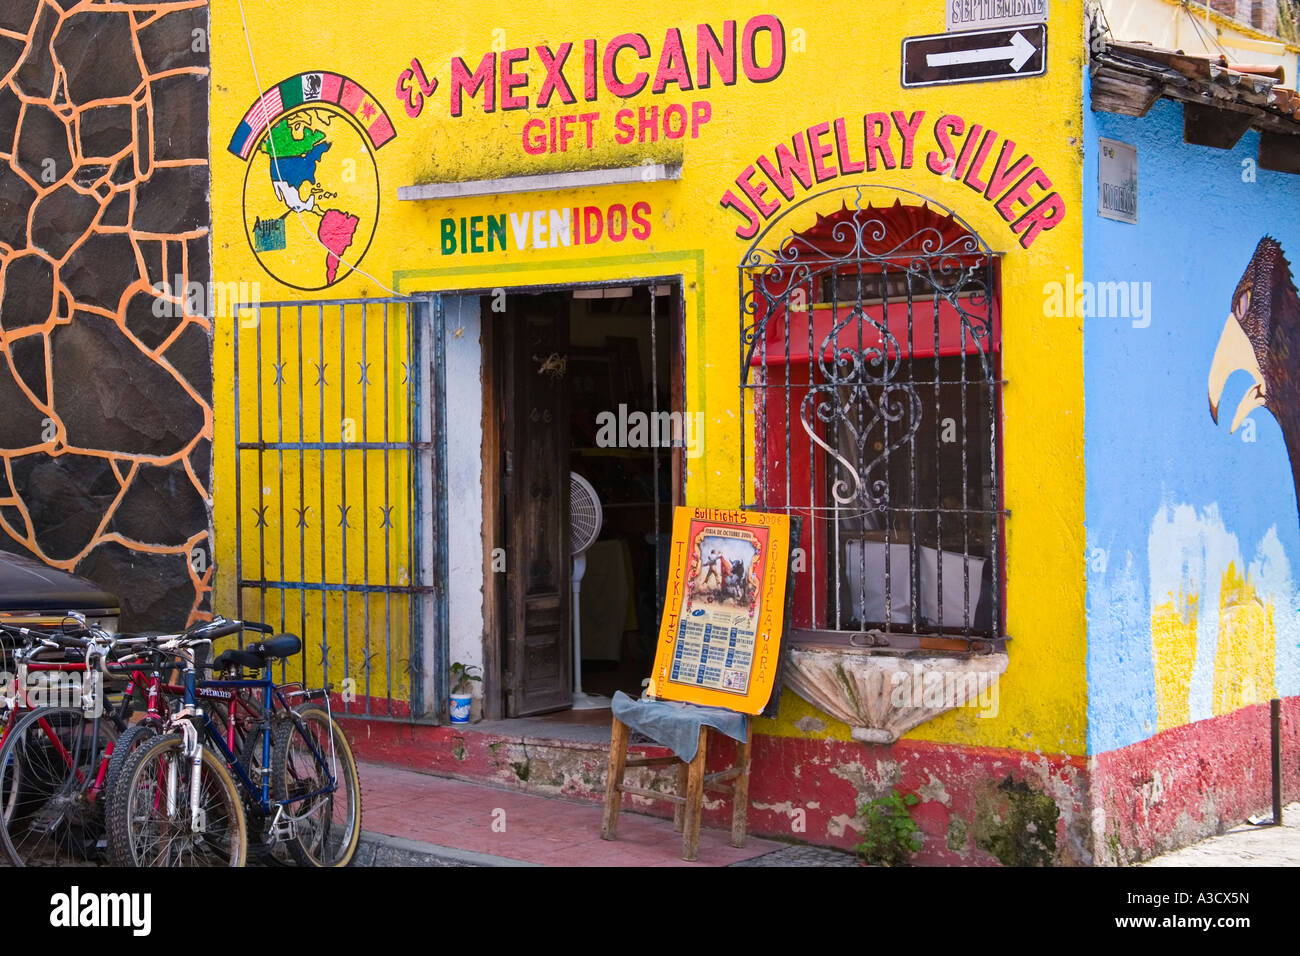 Mexicano Gift Shop Stock Photo